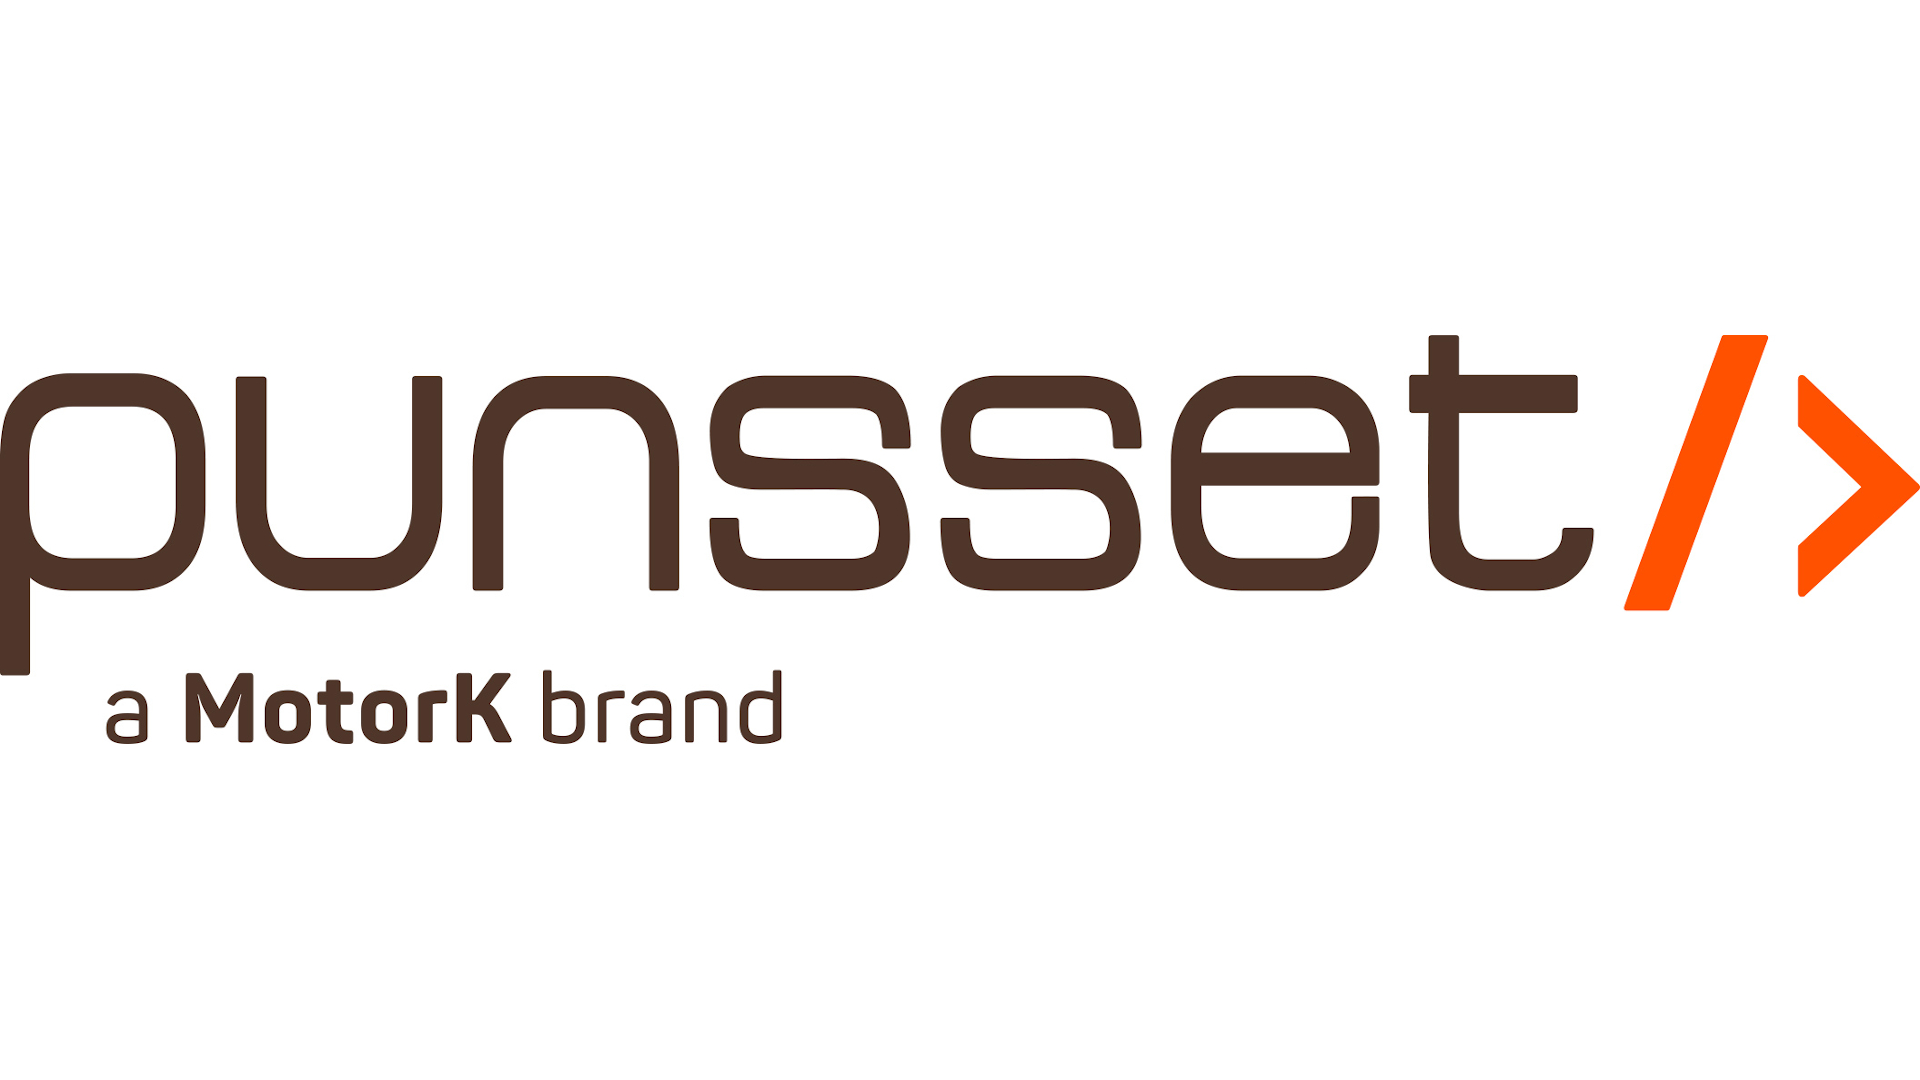 Punsset, a MotorK brand